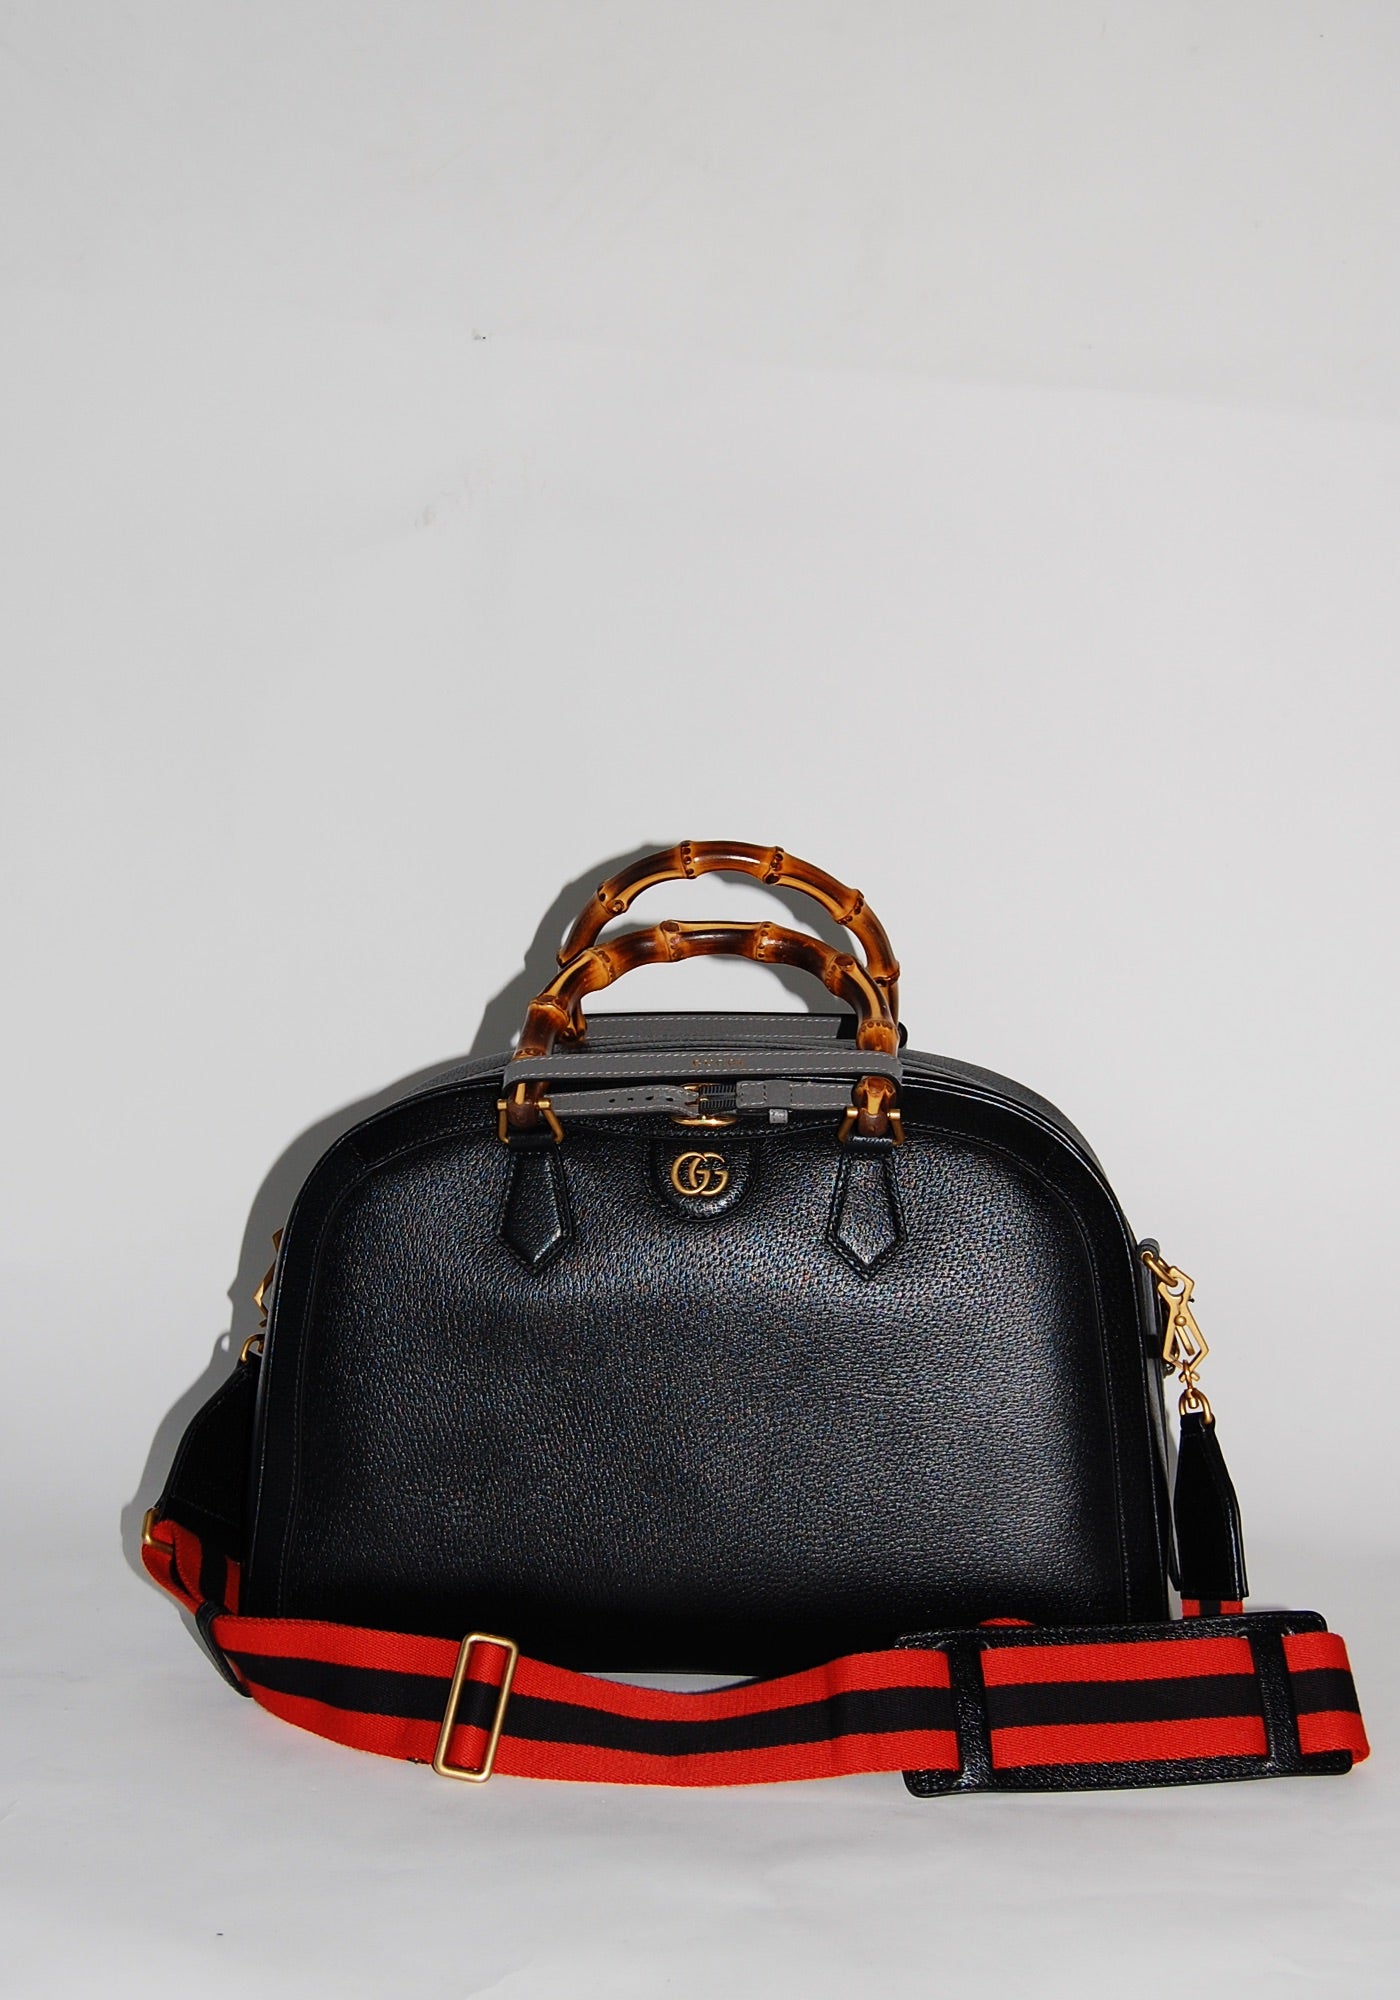 Gucci Black Large Diana Duffle Bag